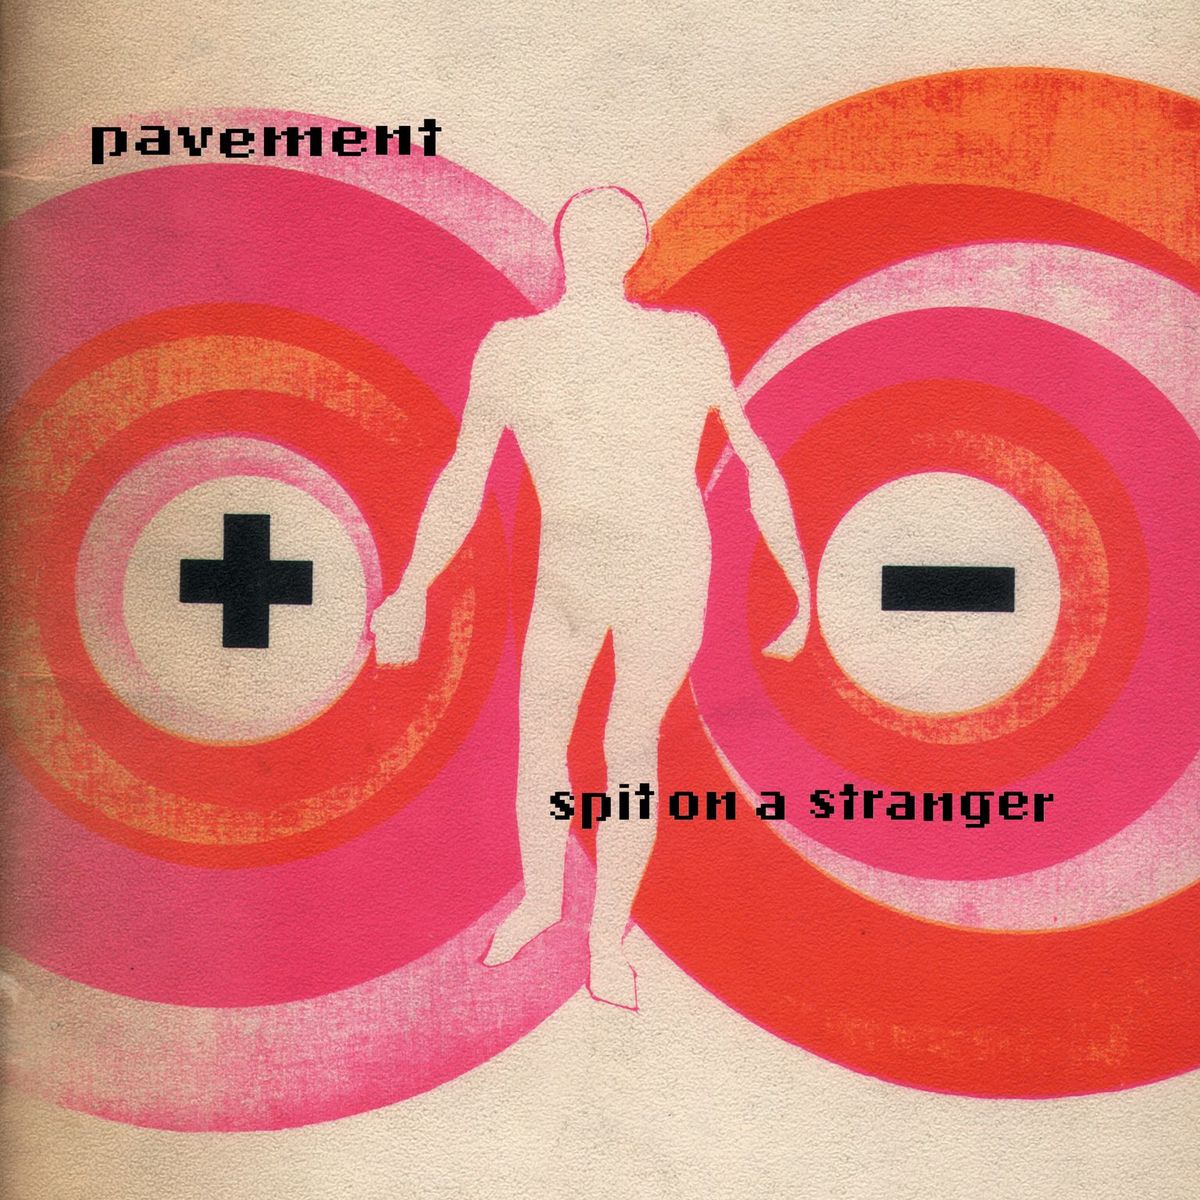 Pavement "Spit on a Stranger EP" LP